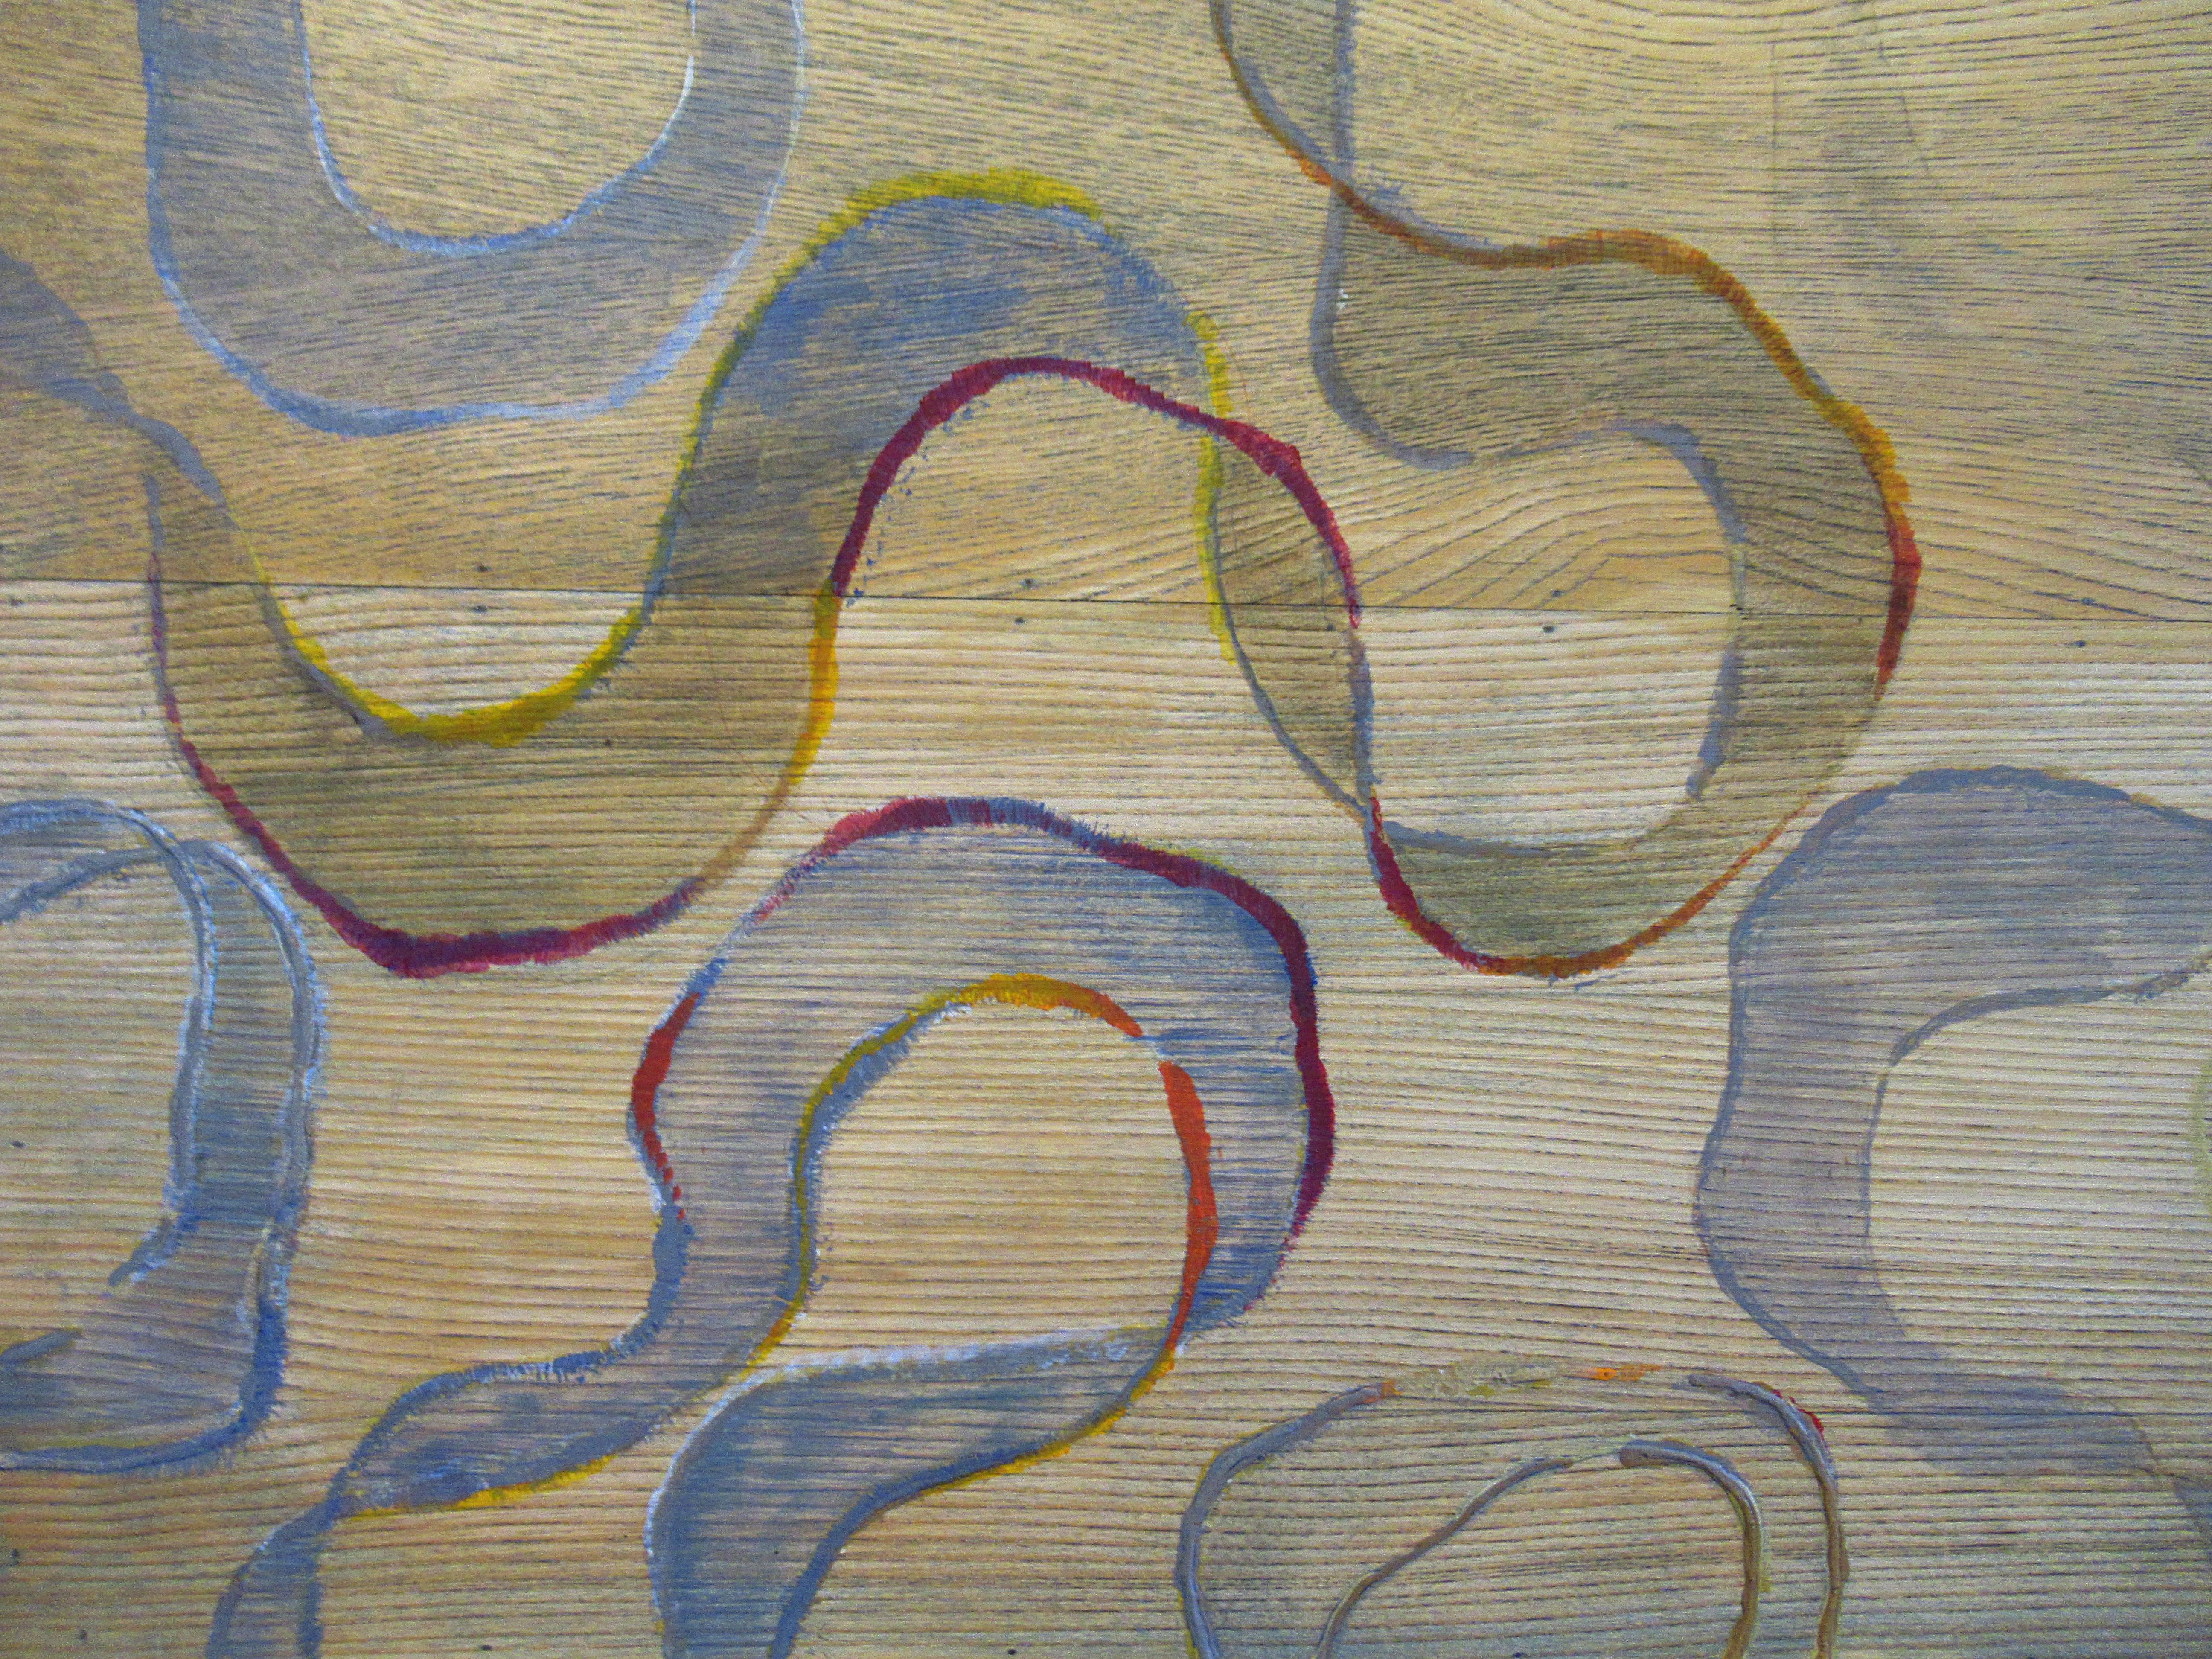 4 Seasons Series, Dye, Acrylic and Oil on Variations of Wood, Jane Park Wells 1